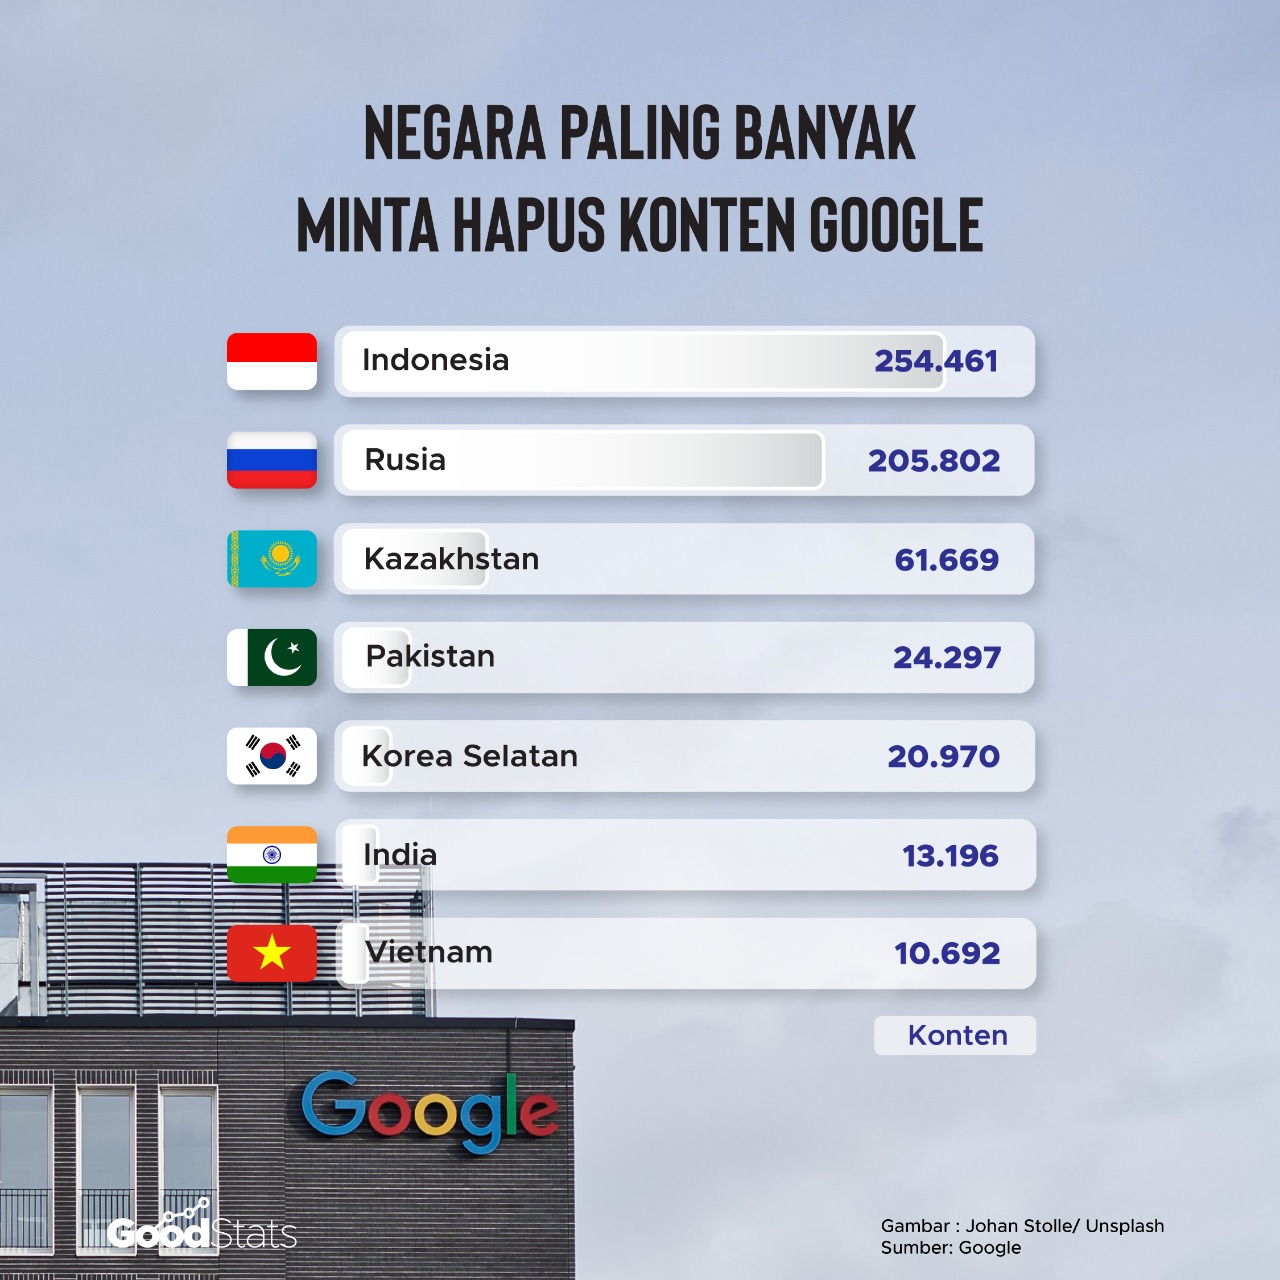 Negara paling banyak minta hapus konten Google | GoodStats